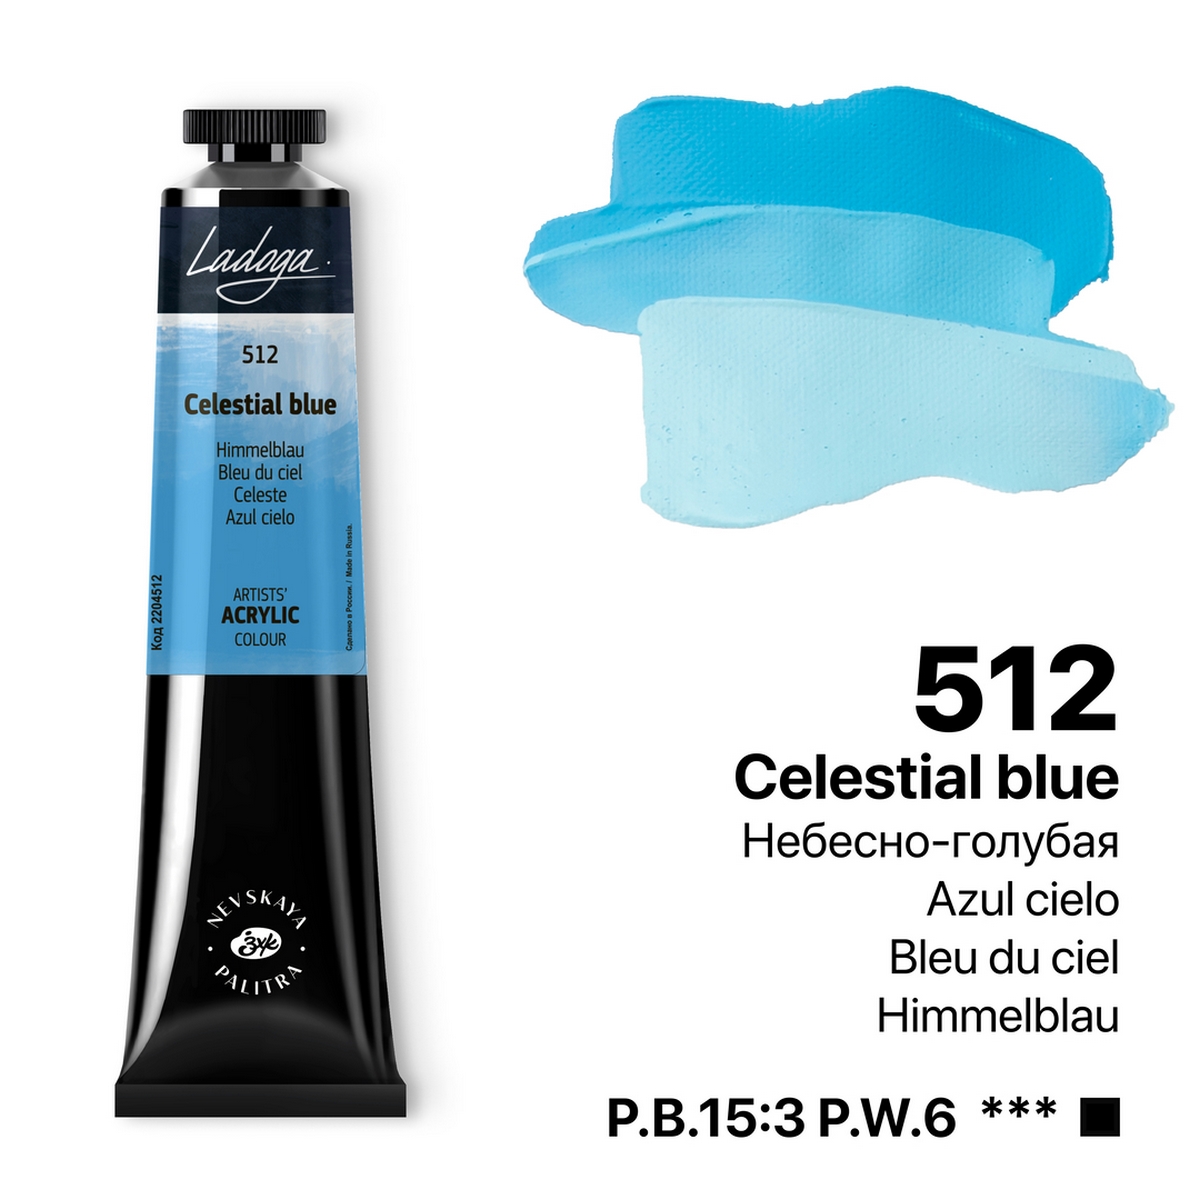 Acrylic colour Ladoga, Celestial blue, № 512